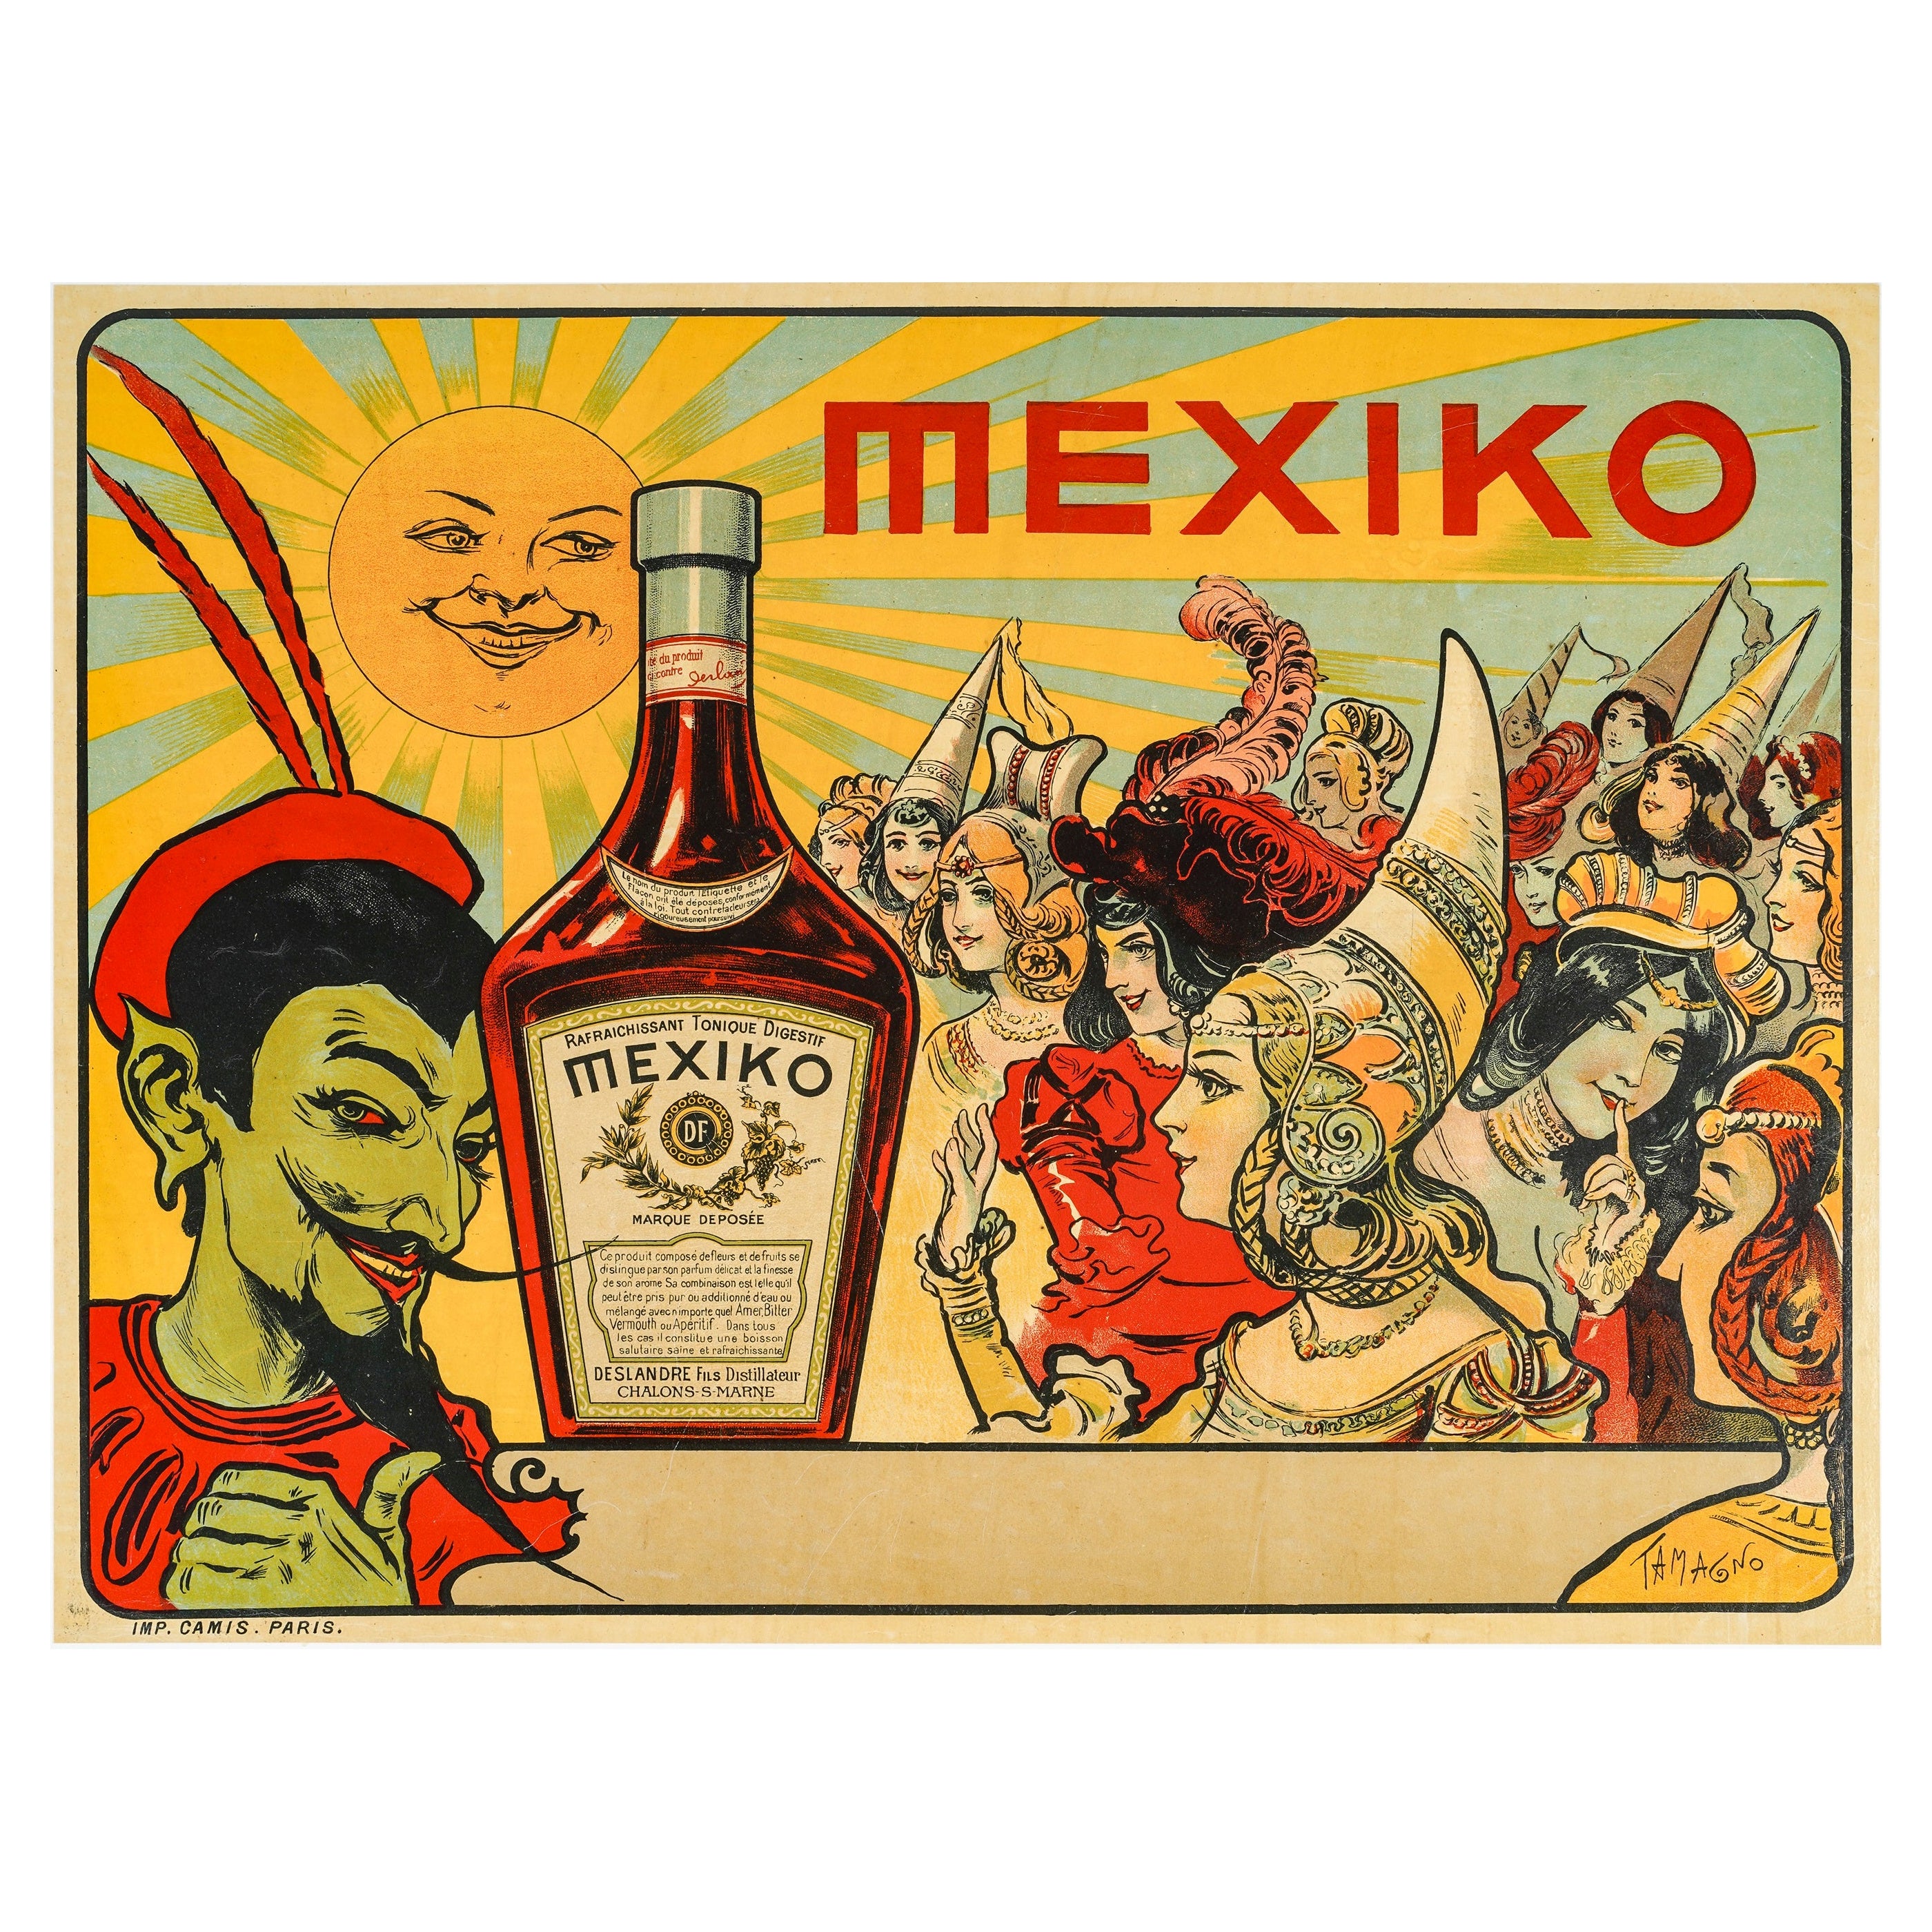 Tamagno, Original Vintage Poster, Mexiko Alcohol, Devil, Sun, Middle Age, 1900